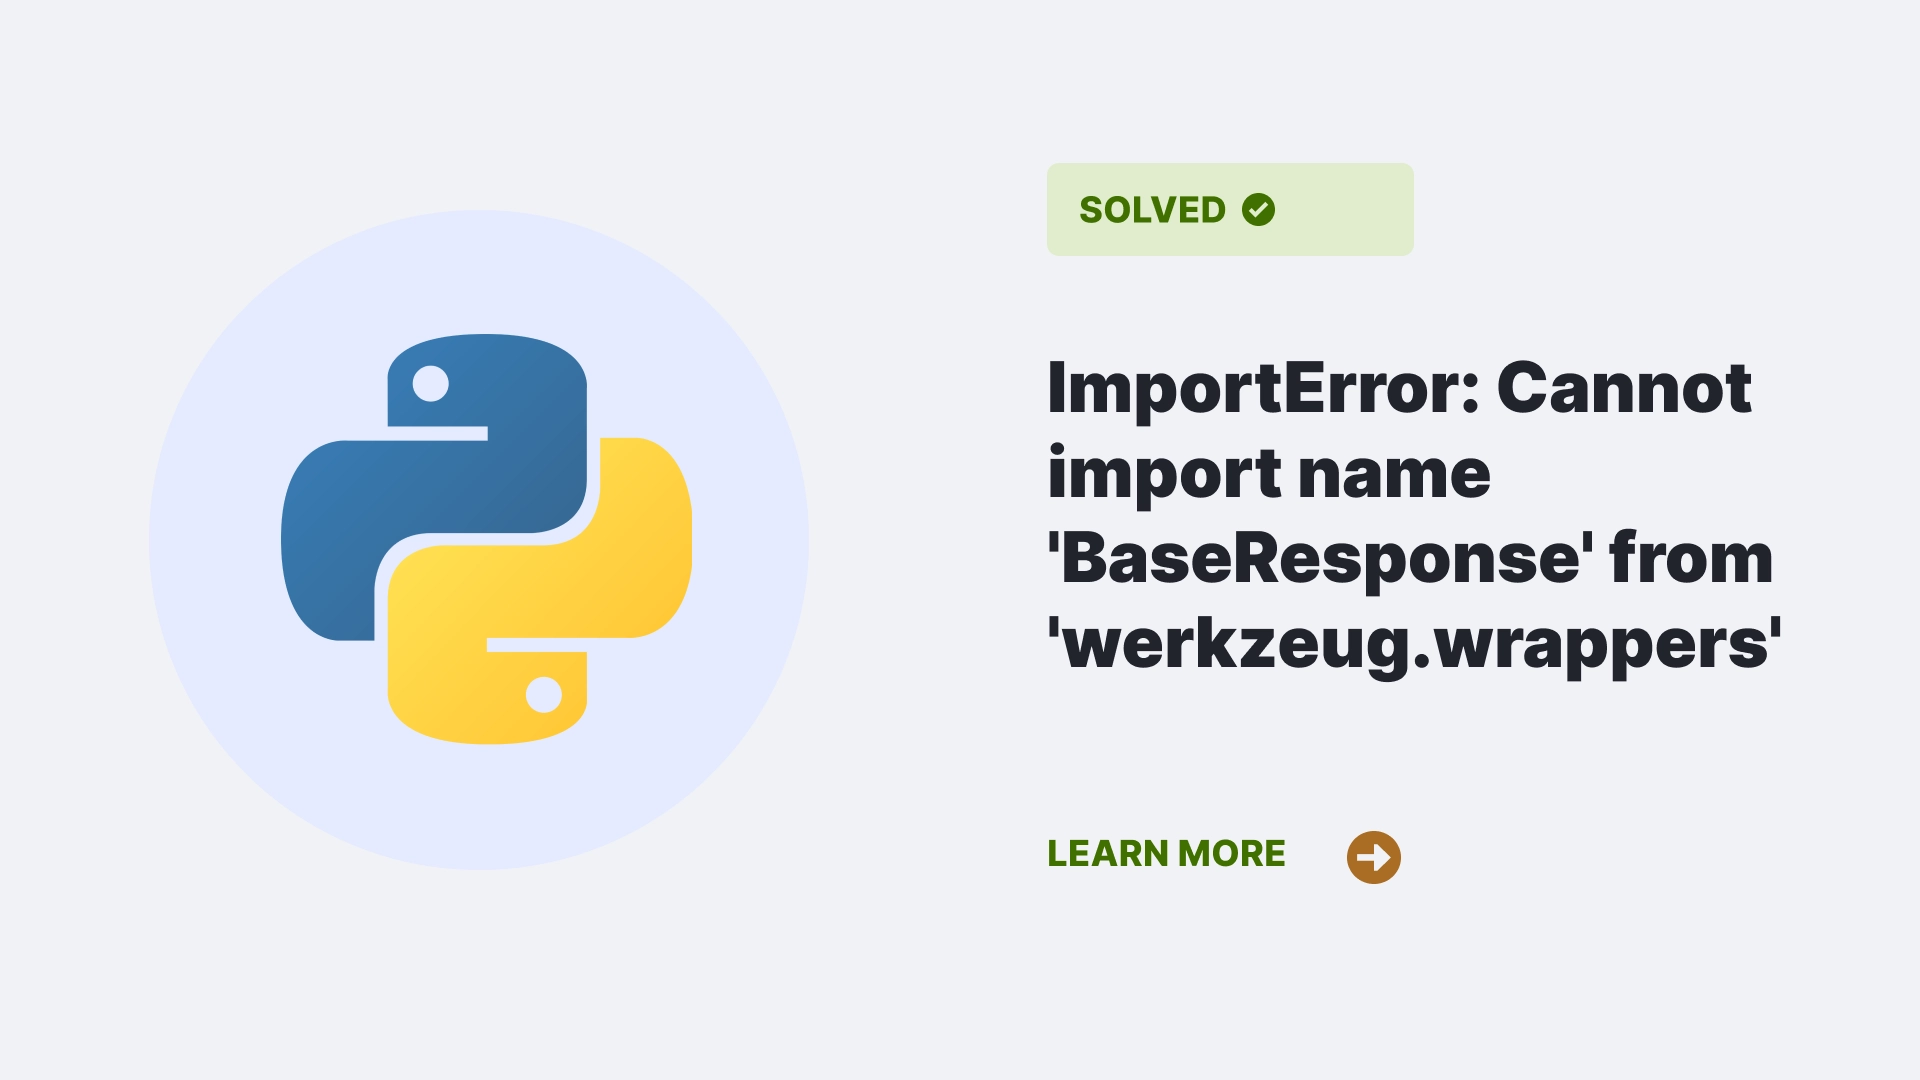 ImportError: Cannot import name 'BaseResponse' from 'werkzeug.wrappers'